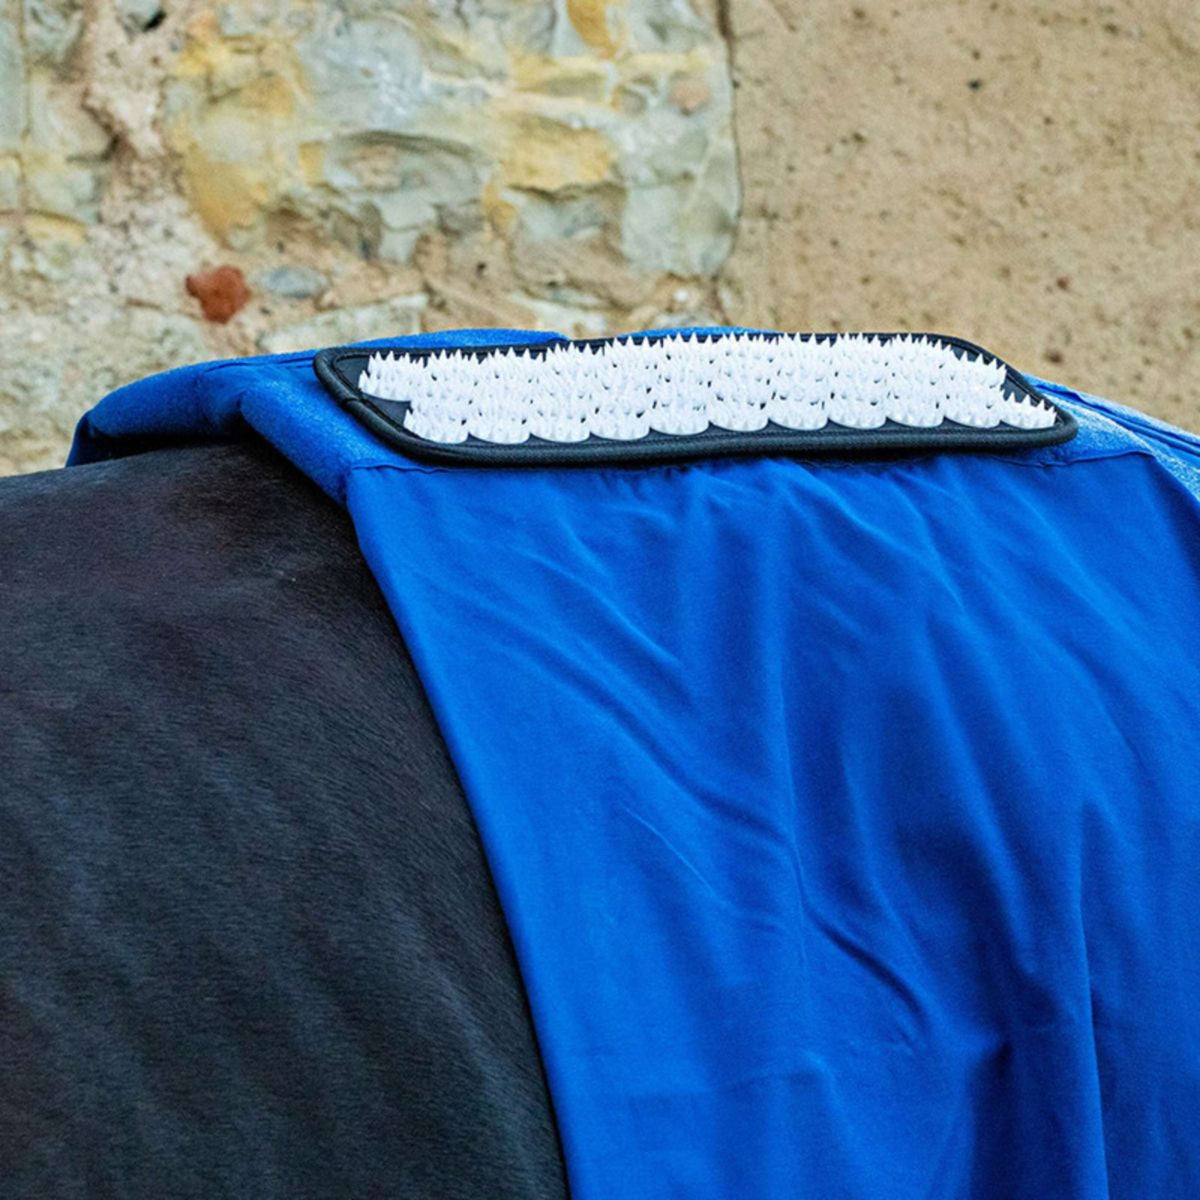 Accuhorsemat Blanket Original mit Accupressure Mat Blau